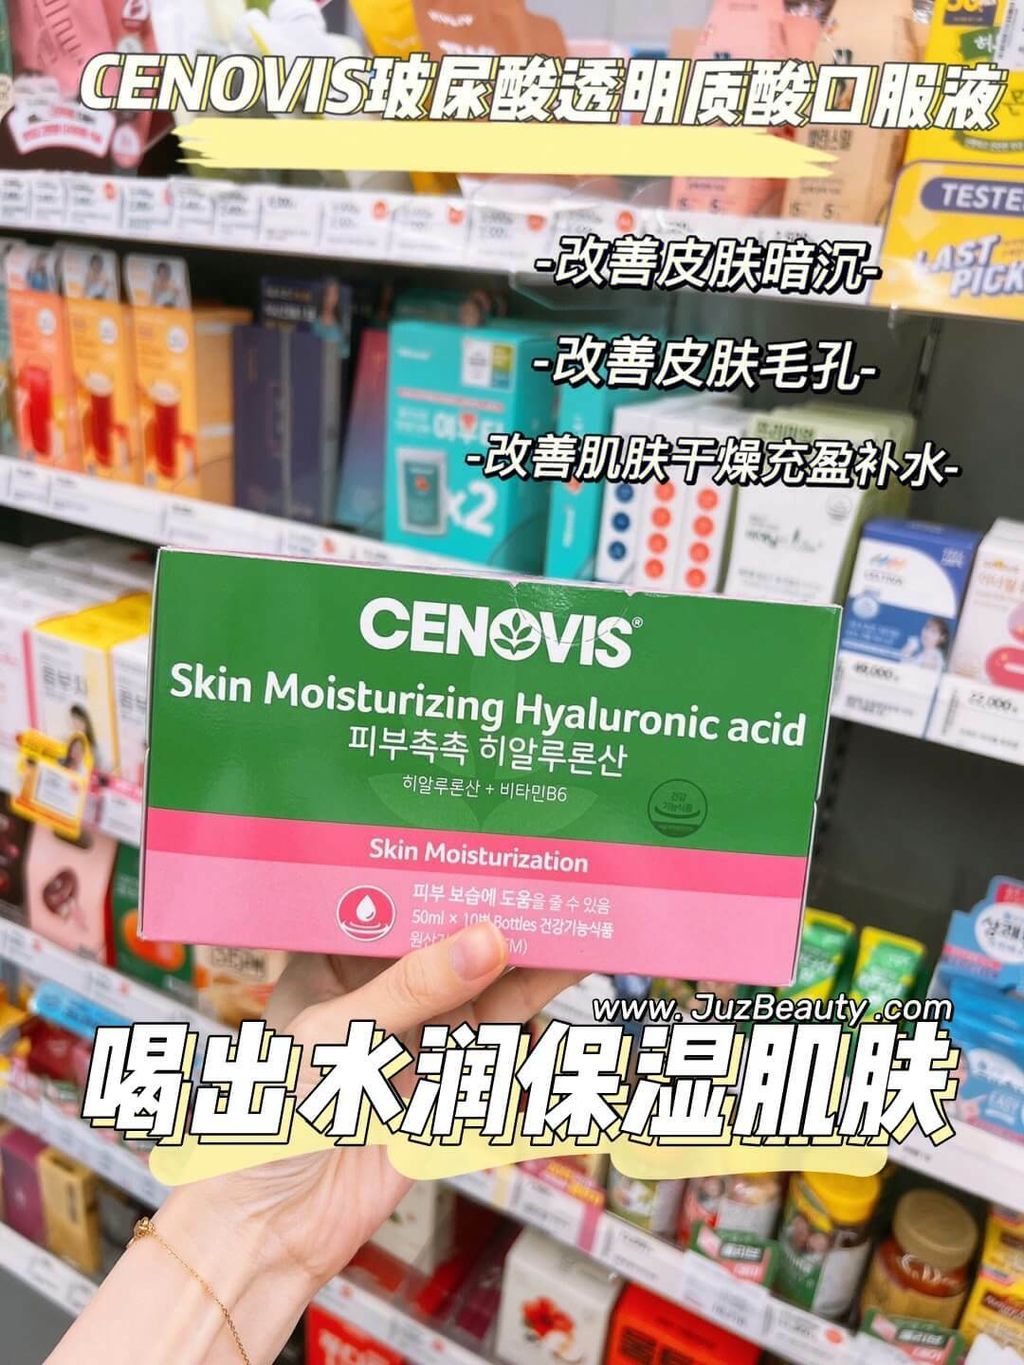 JuzBeauty_JuzBeautyMalaysia_JuzPretty_Authentic_Kbeauty_Malaysia_Skin_Care_Cosmetics_Jbeauty_Australia_Health_Care_Cenovis_Skin_Moisturizing_Hyaluronic_Acid_ (3)